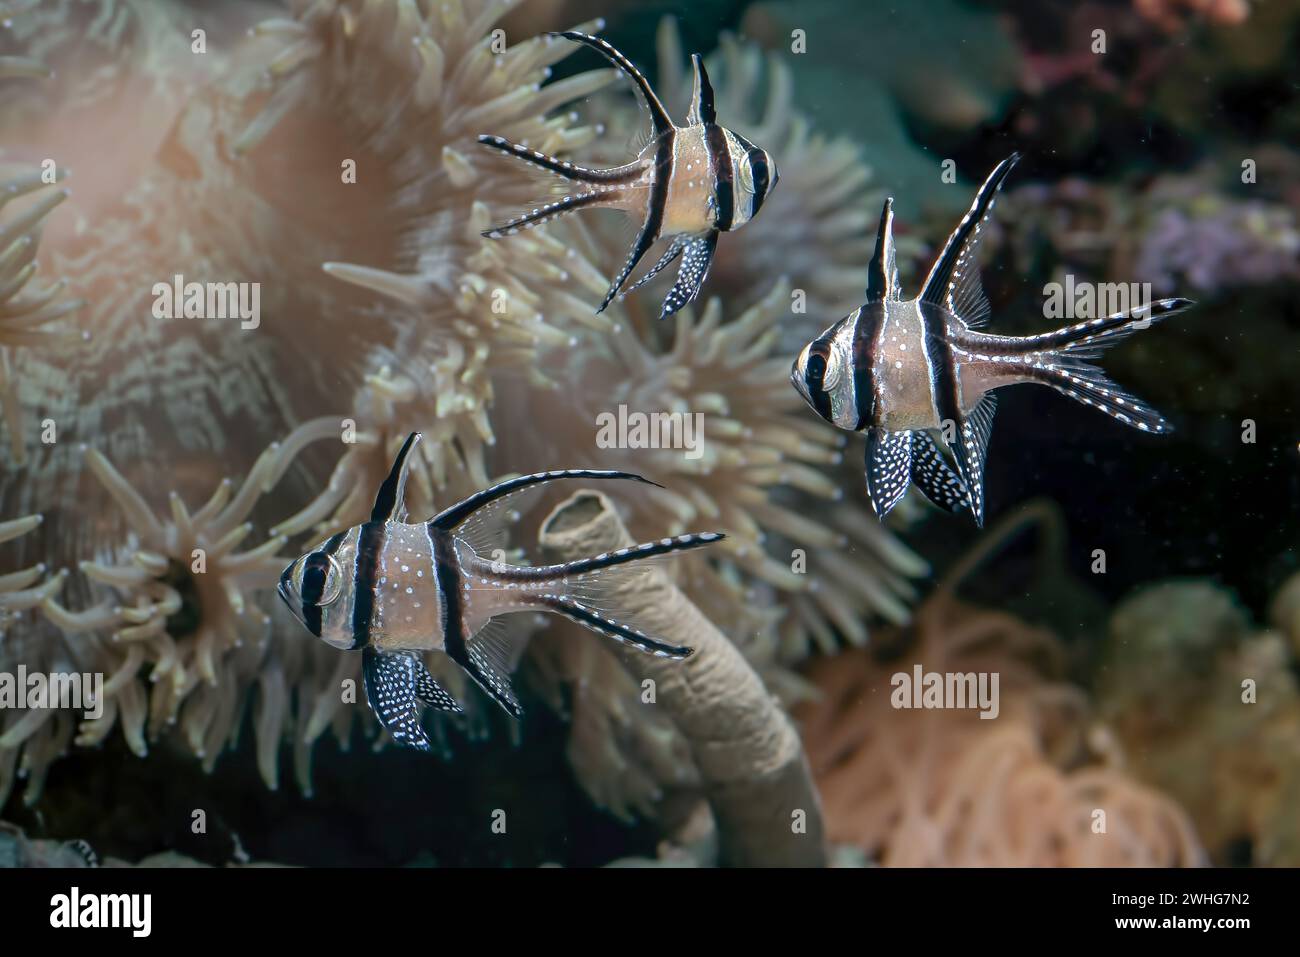 Beautiful banggai cardinal fish at coral reef Stock Photo